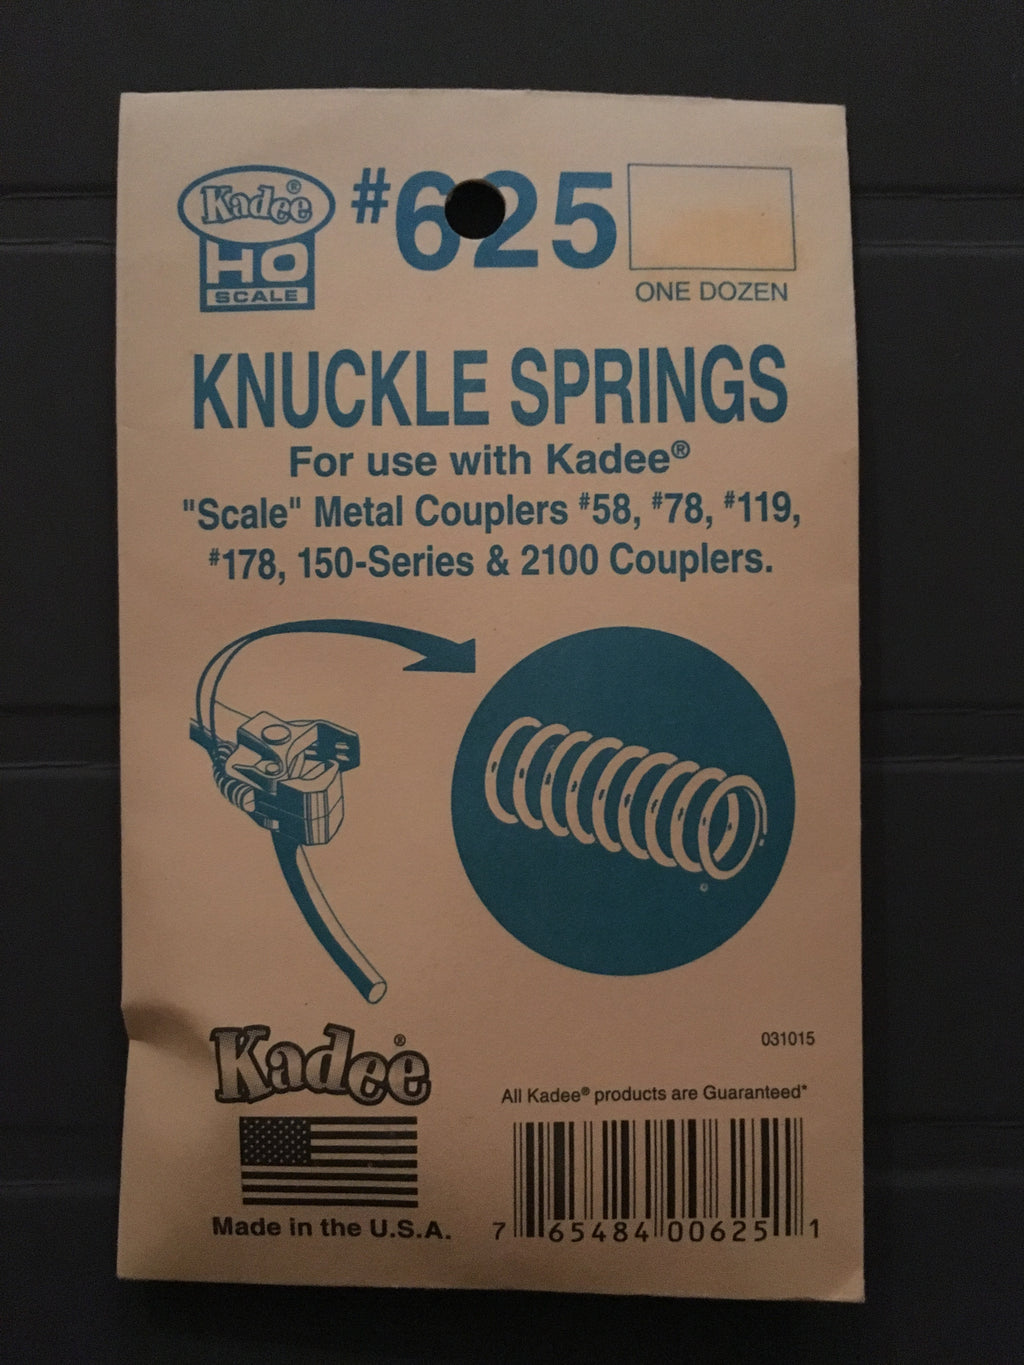 # 625 Knuckle Springs for #58, #78 & #2100 Coupler KADEE